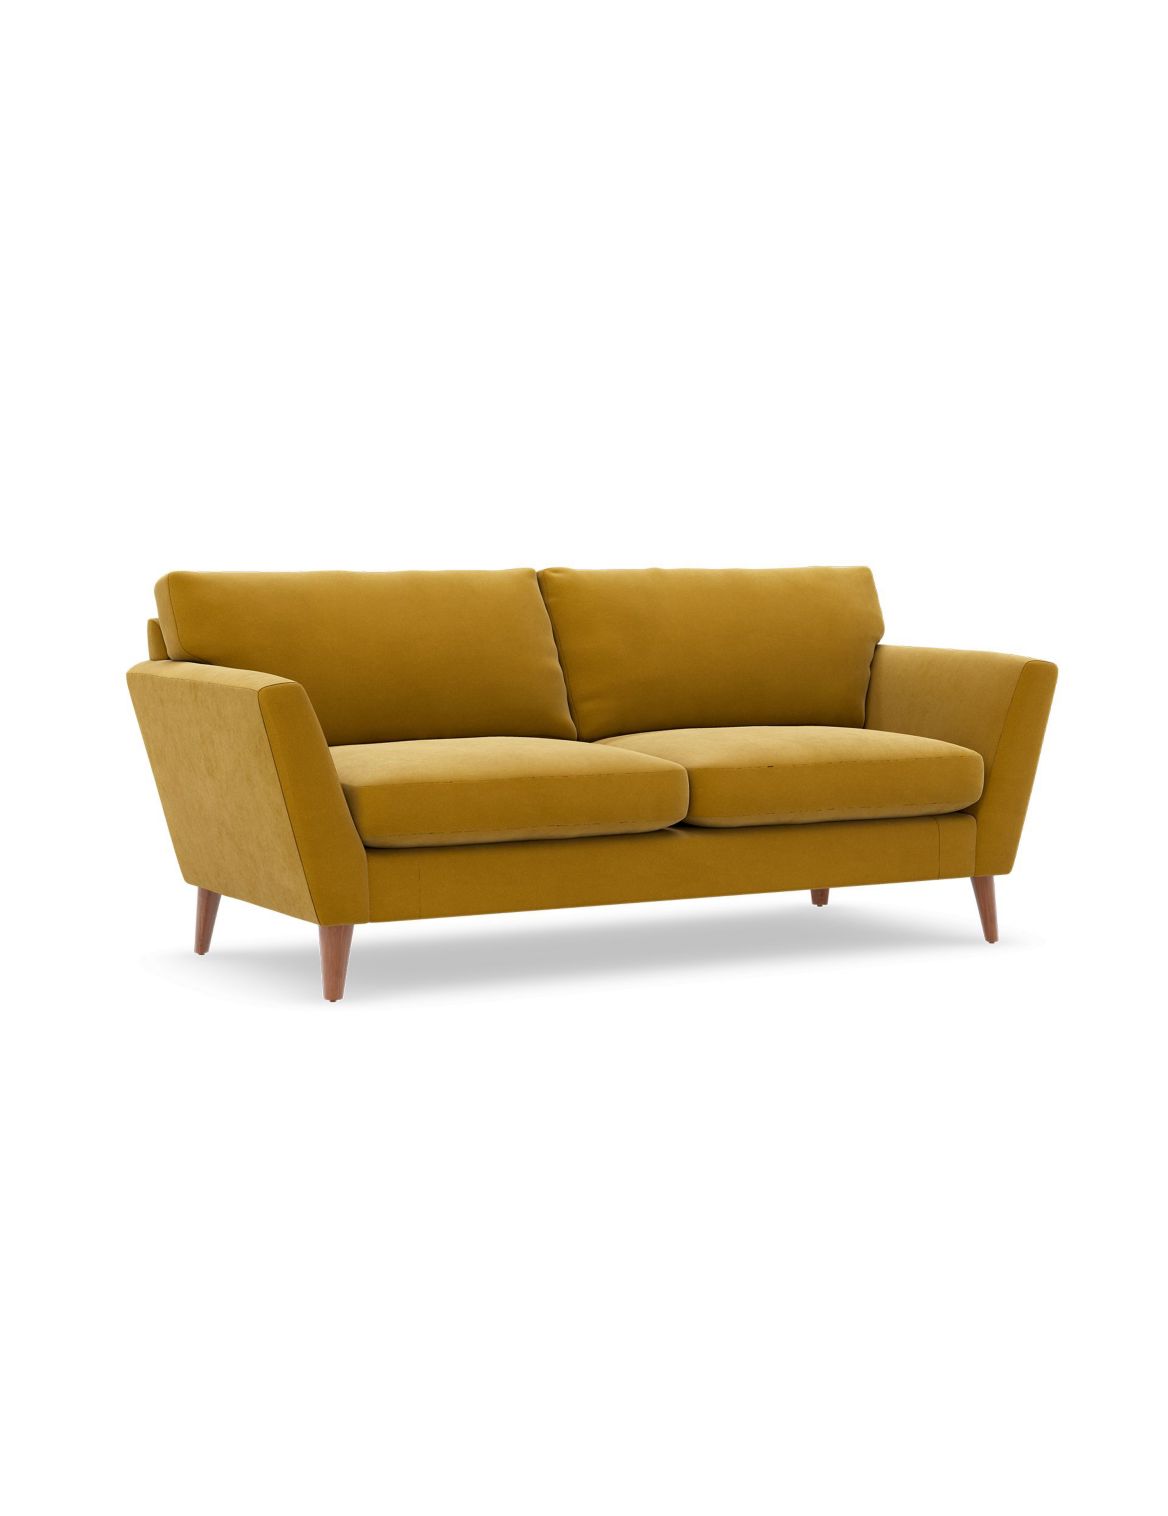 Foxbury Large Sofa yellow